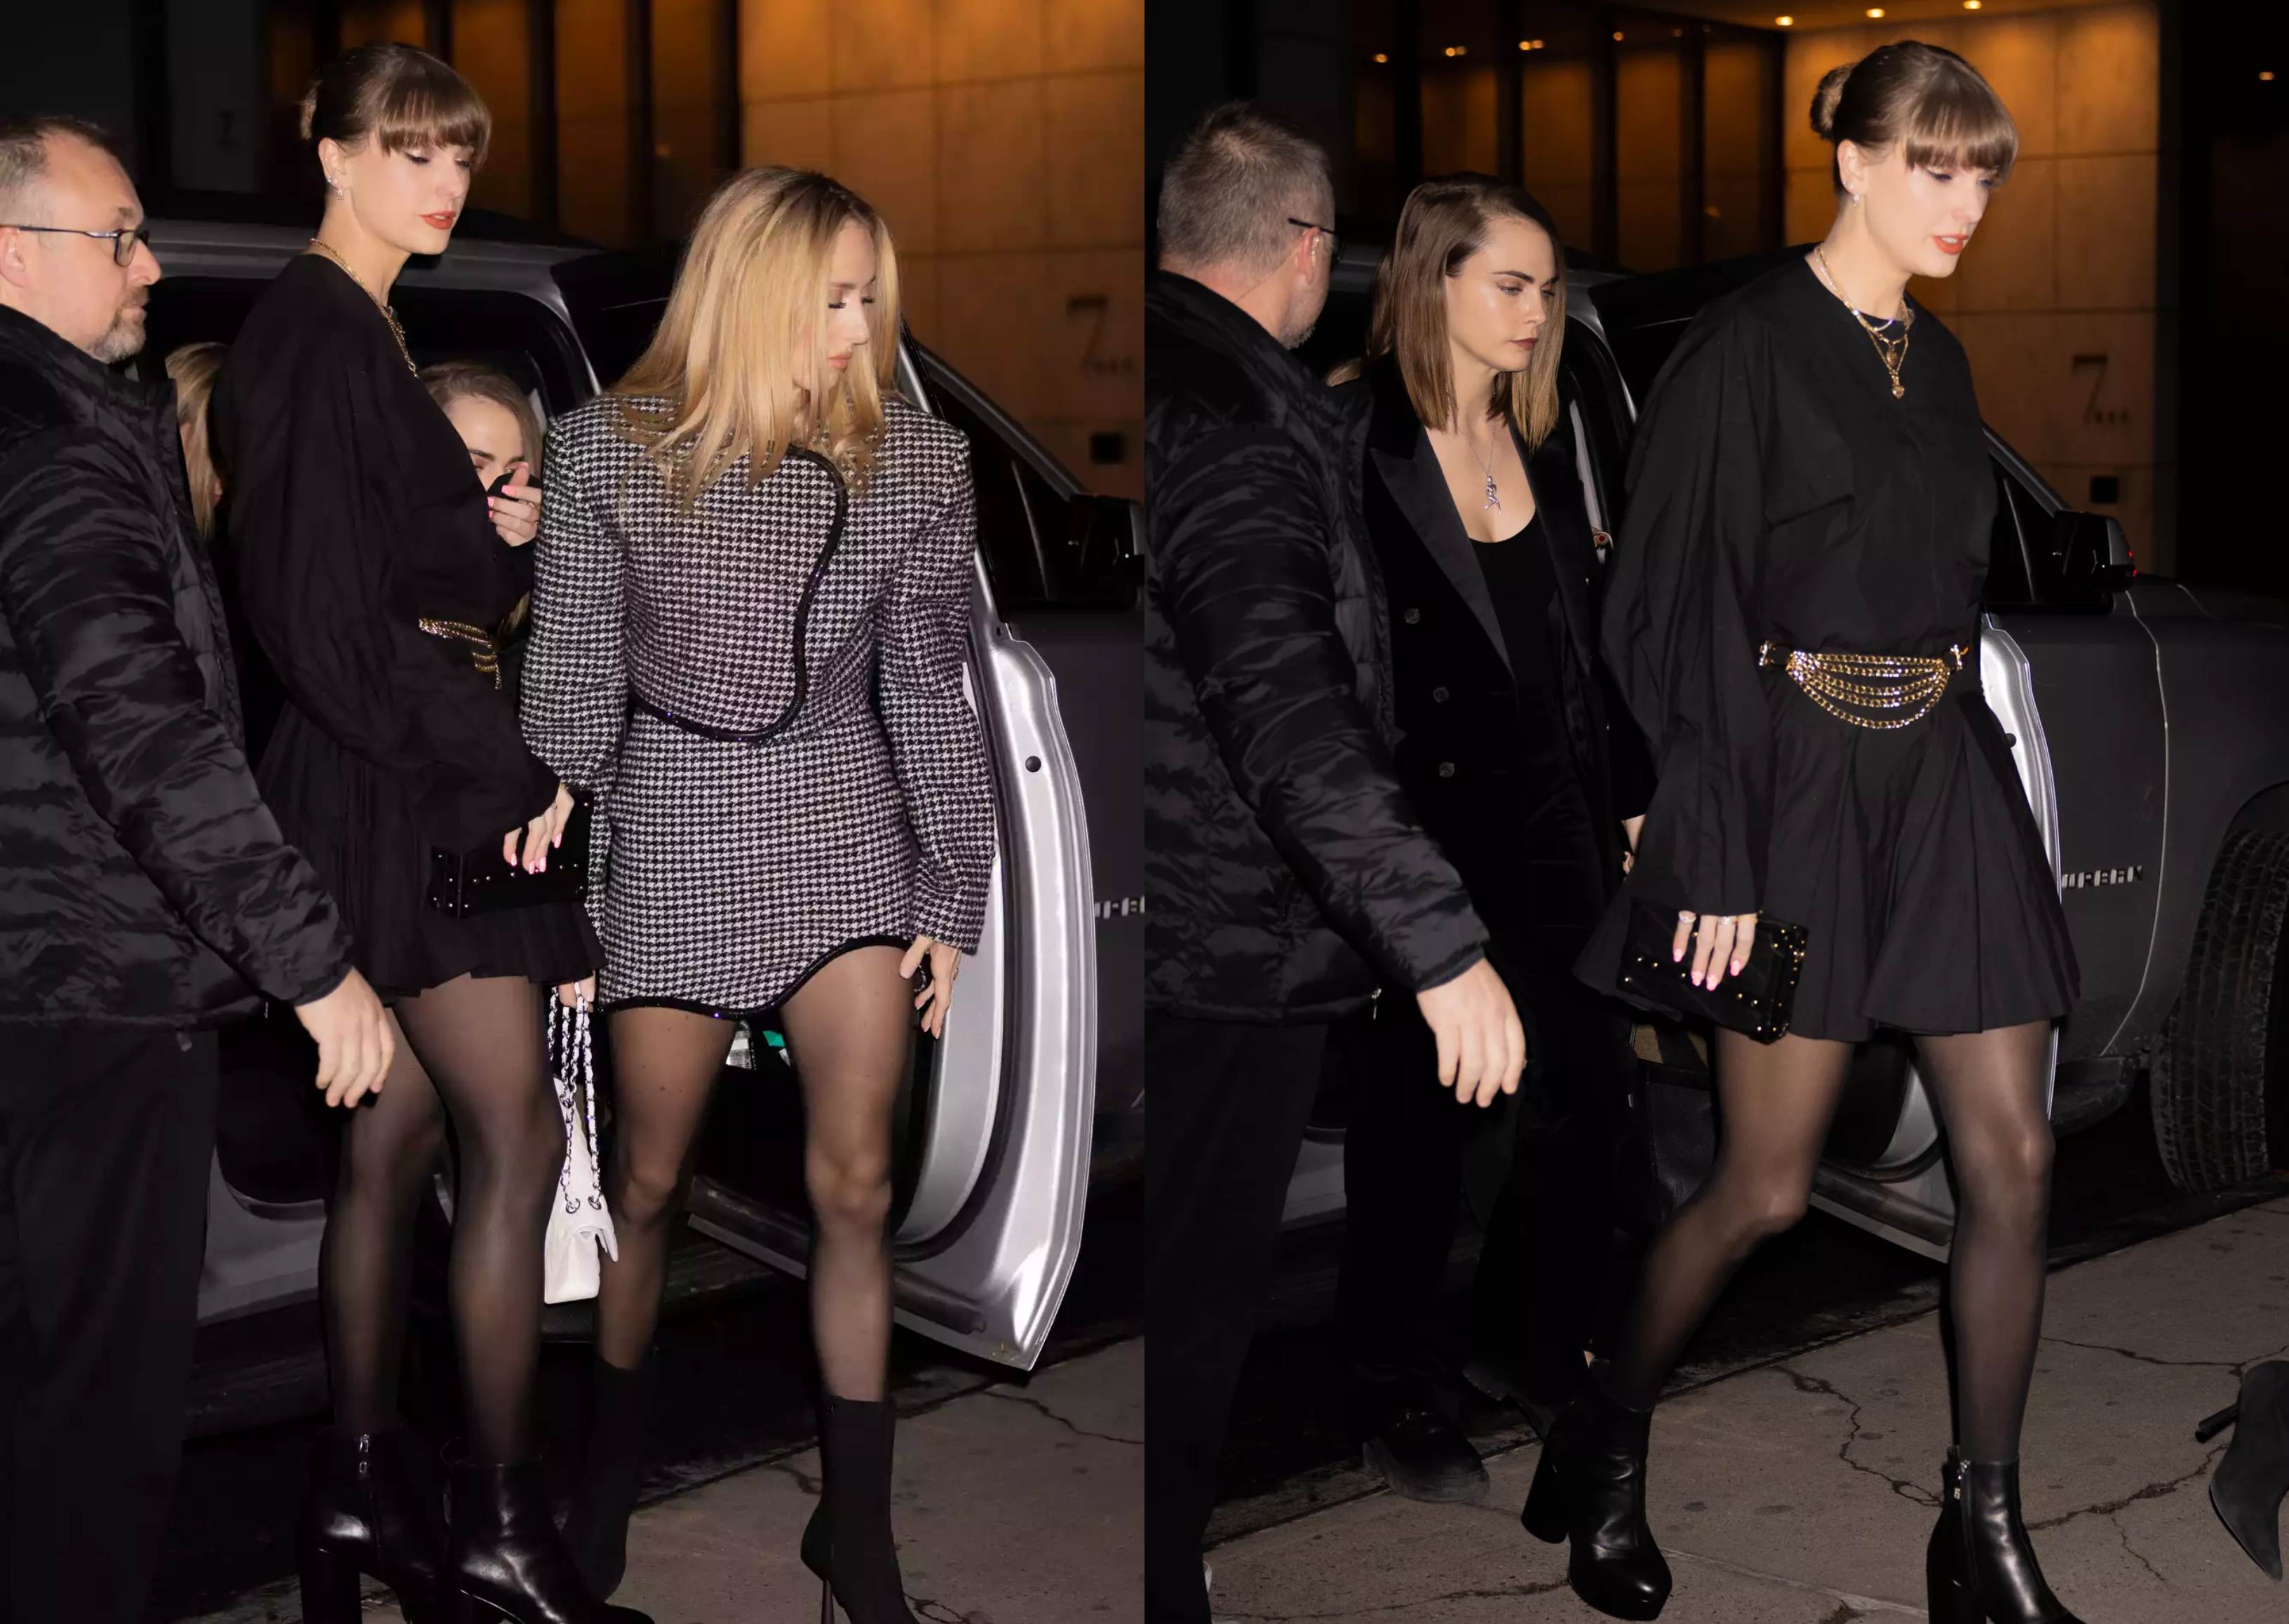 Taylor Swift Rocks a Little Black Dress for Girls' Night Out